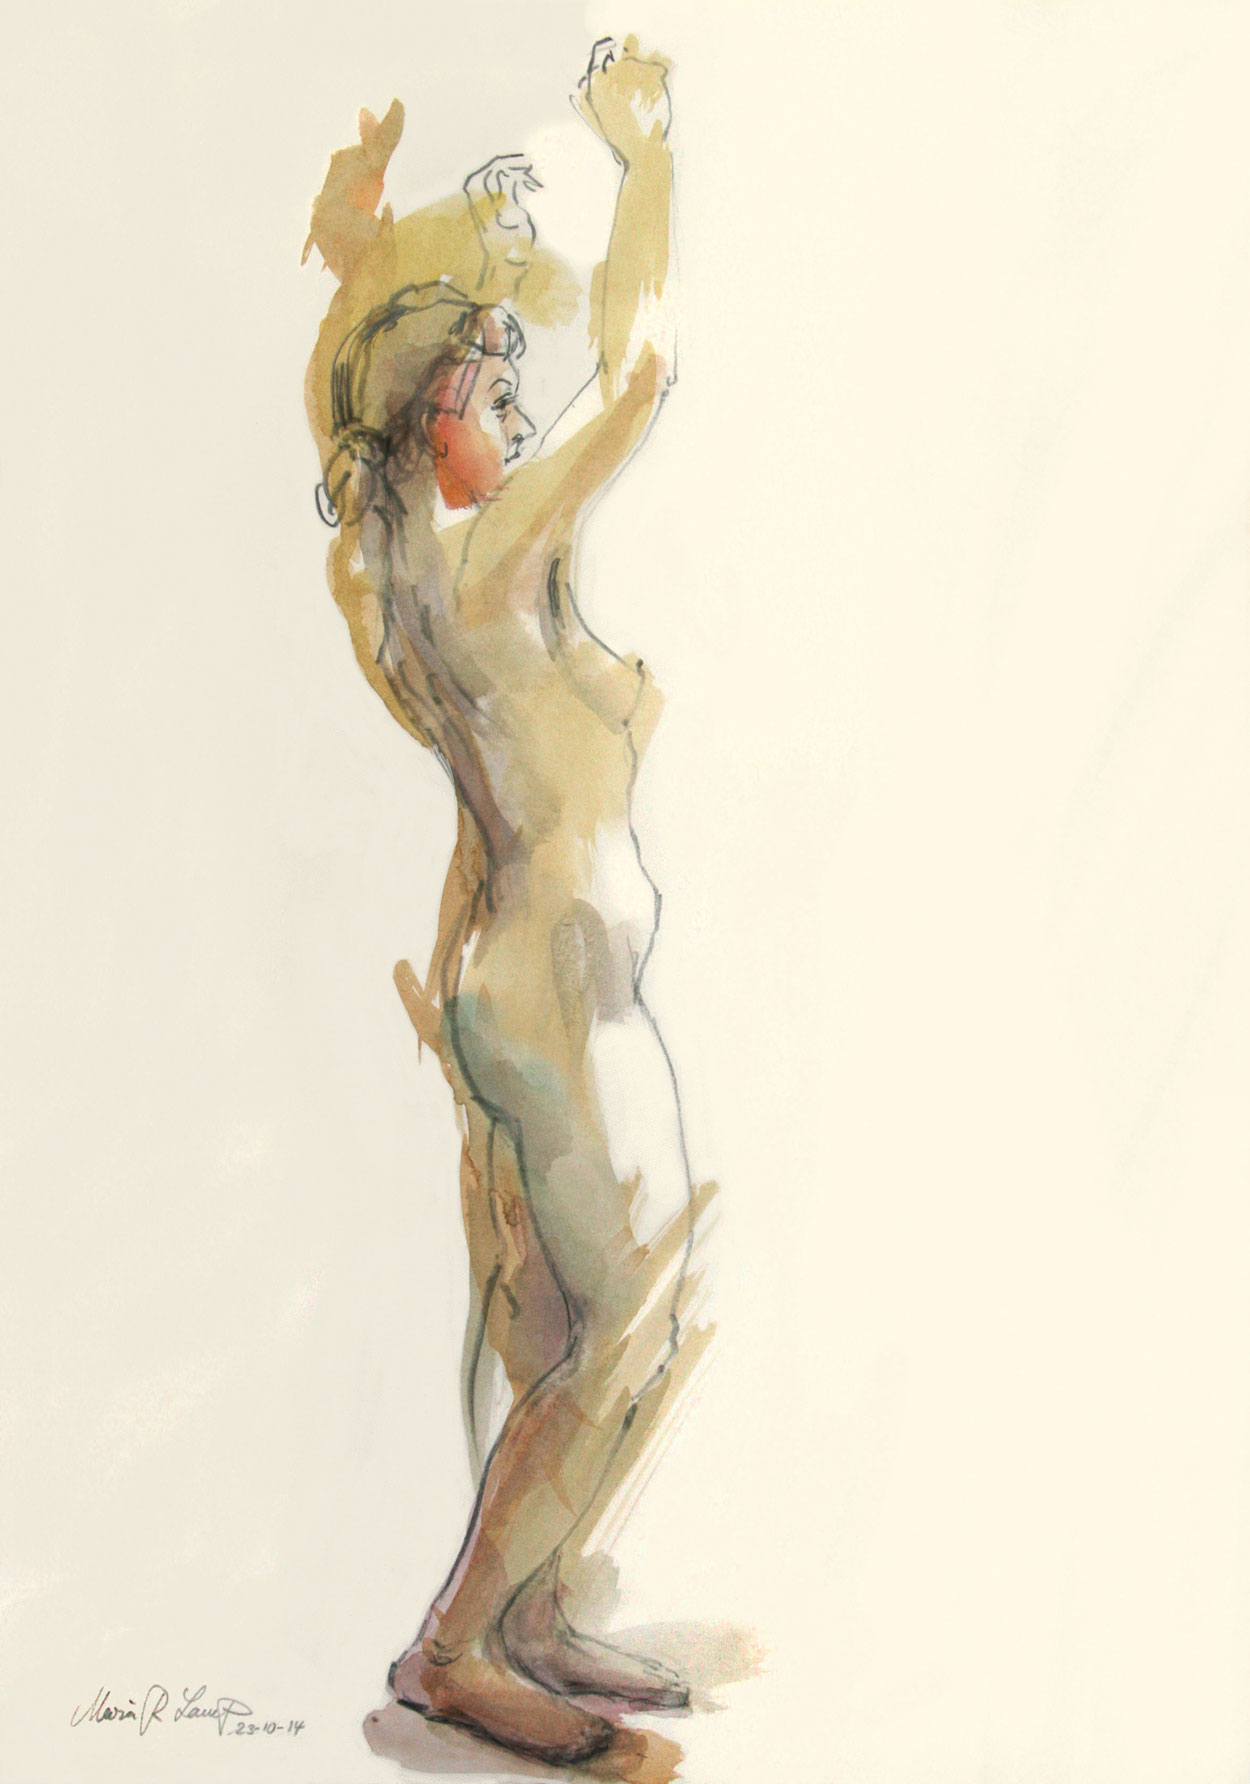 Akt, 29.10.2014, Aquarell/Bleistift auf Papier, 42 x 59 cm